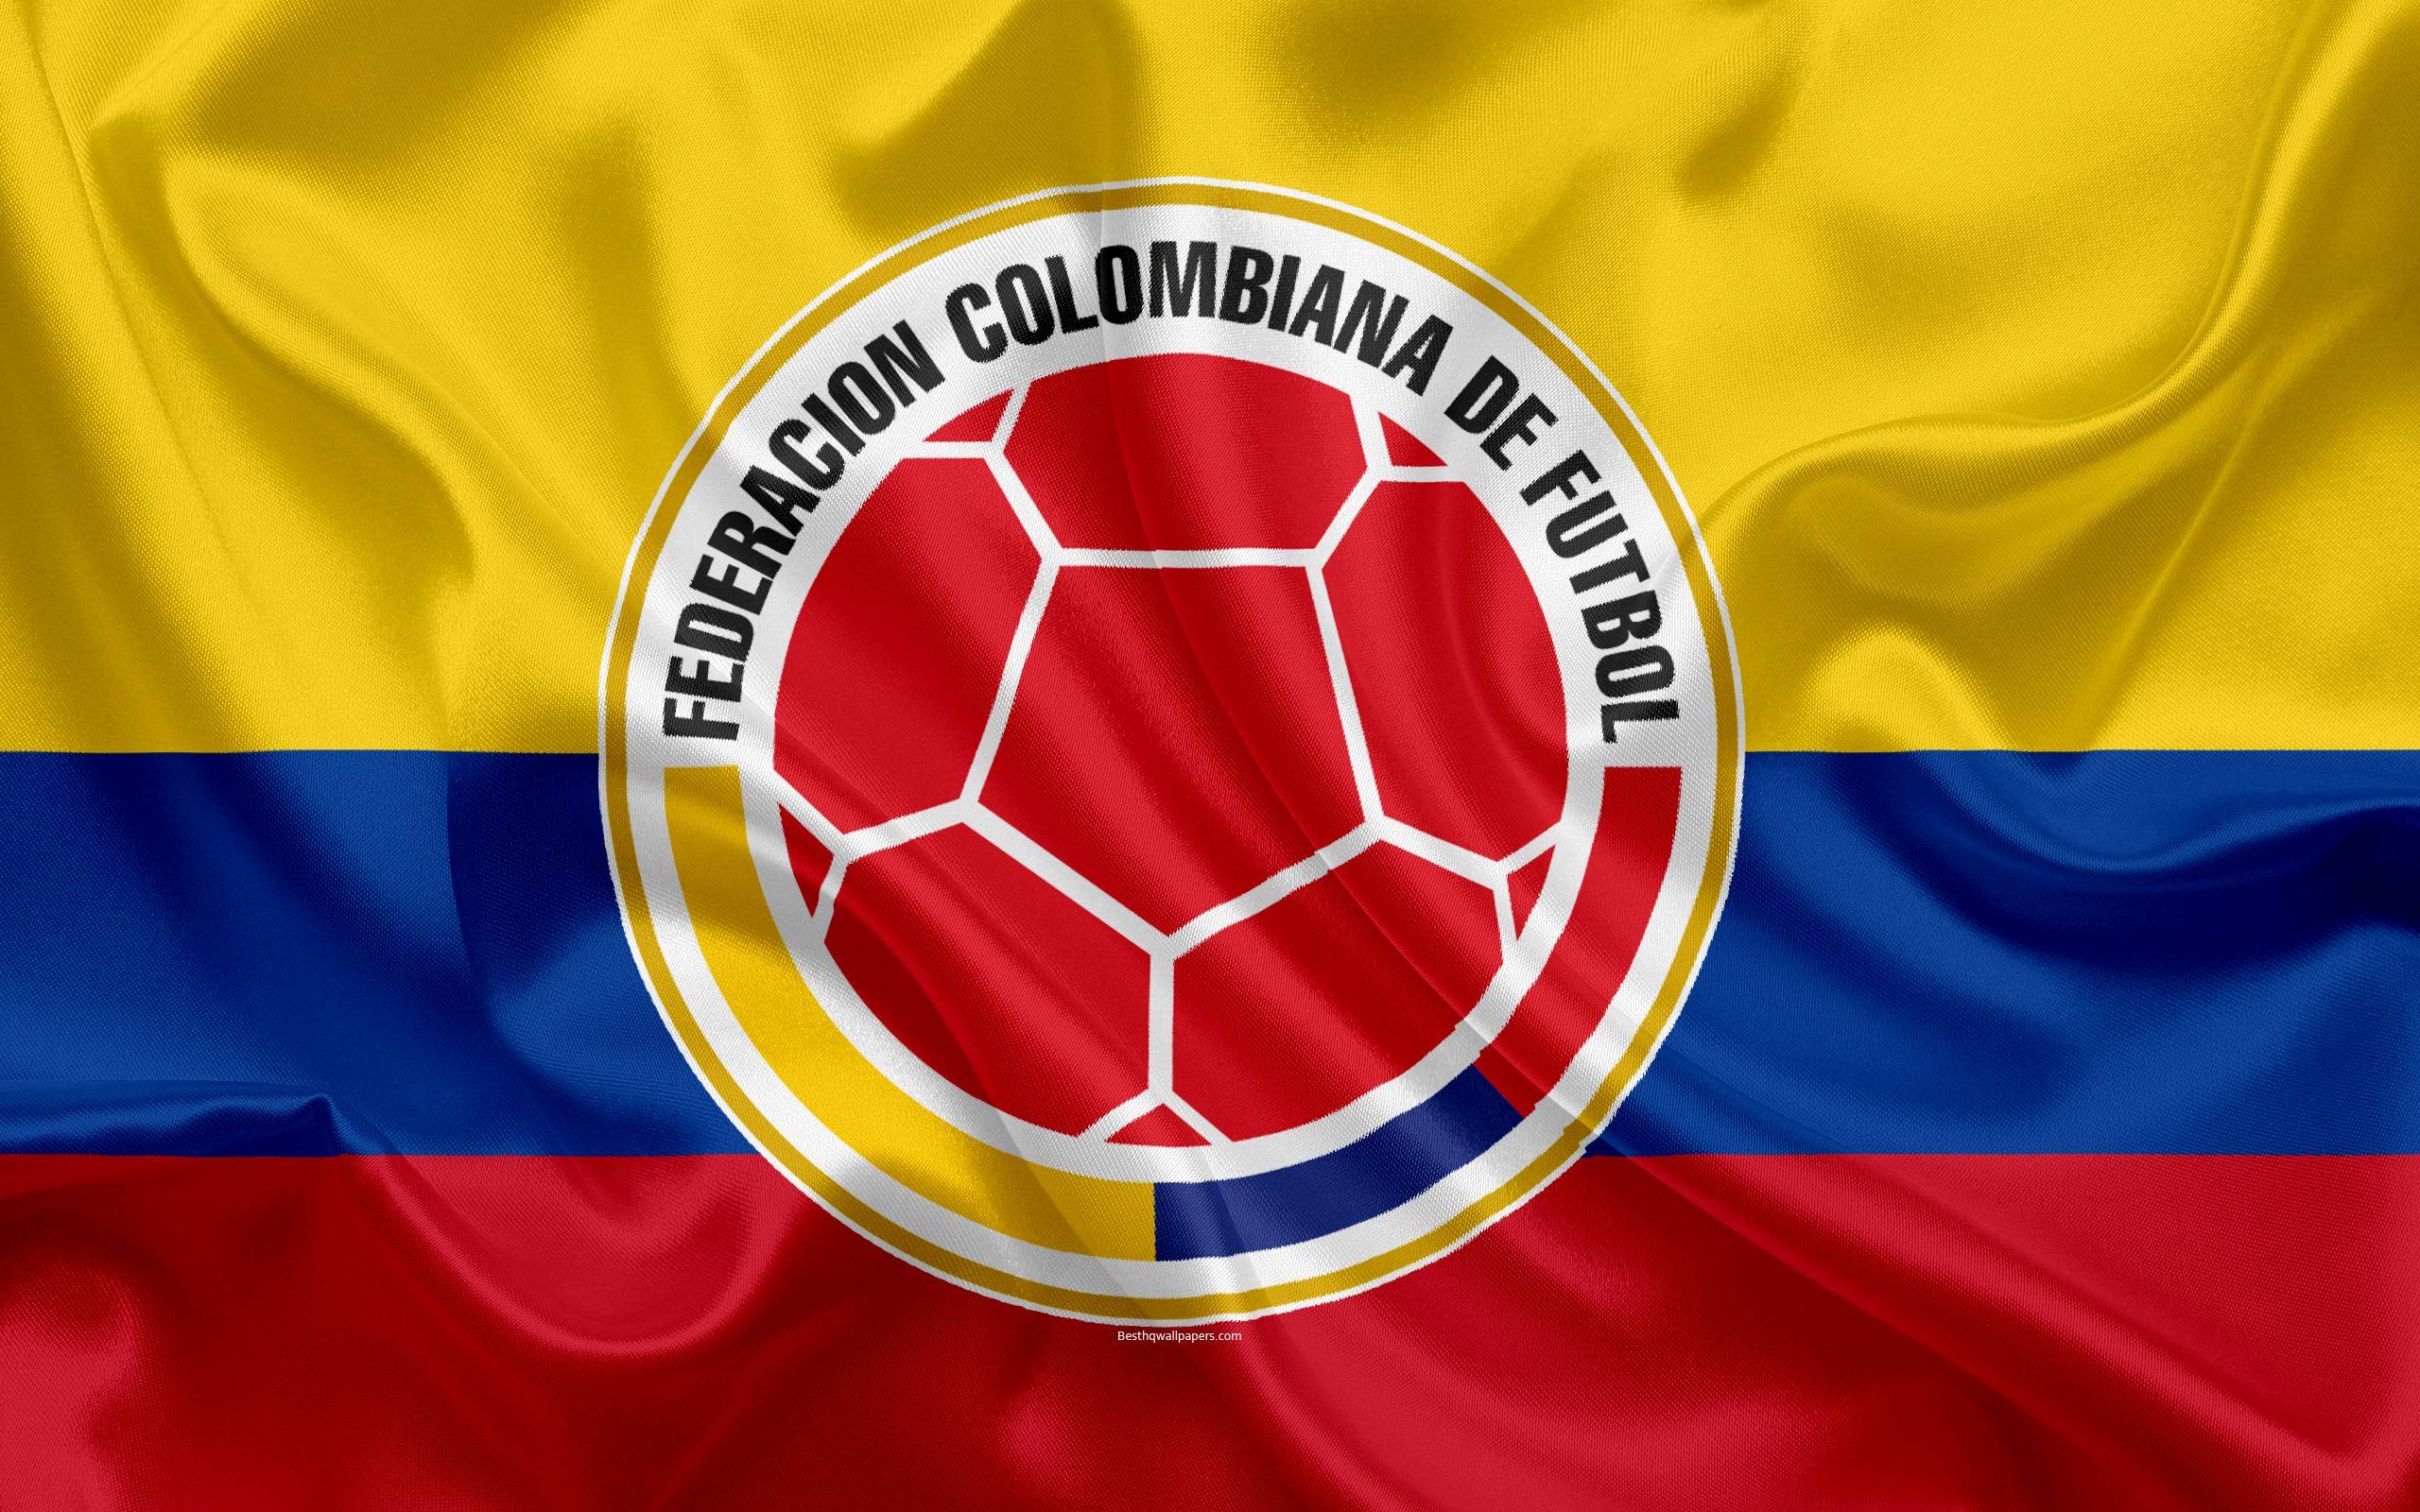 Download wallpaper Colombia national football team, logo, emblem